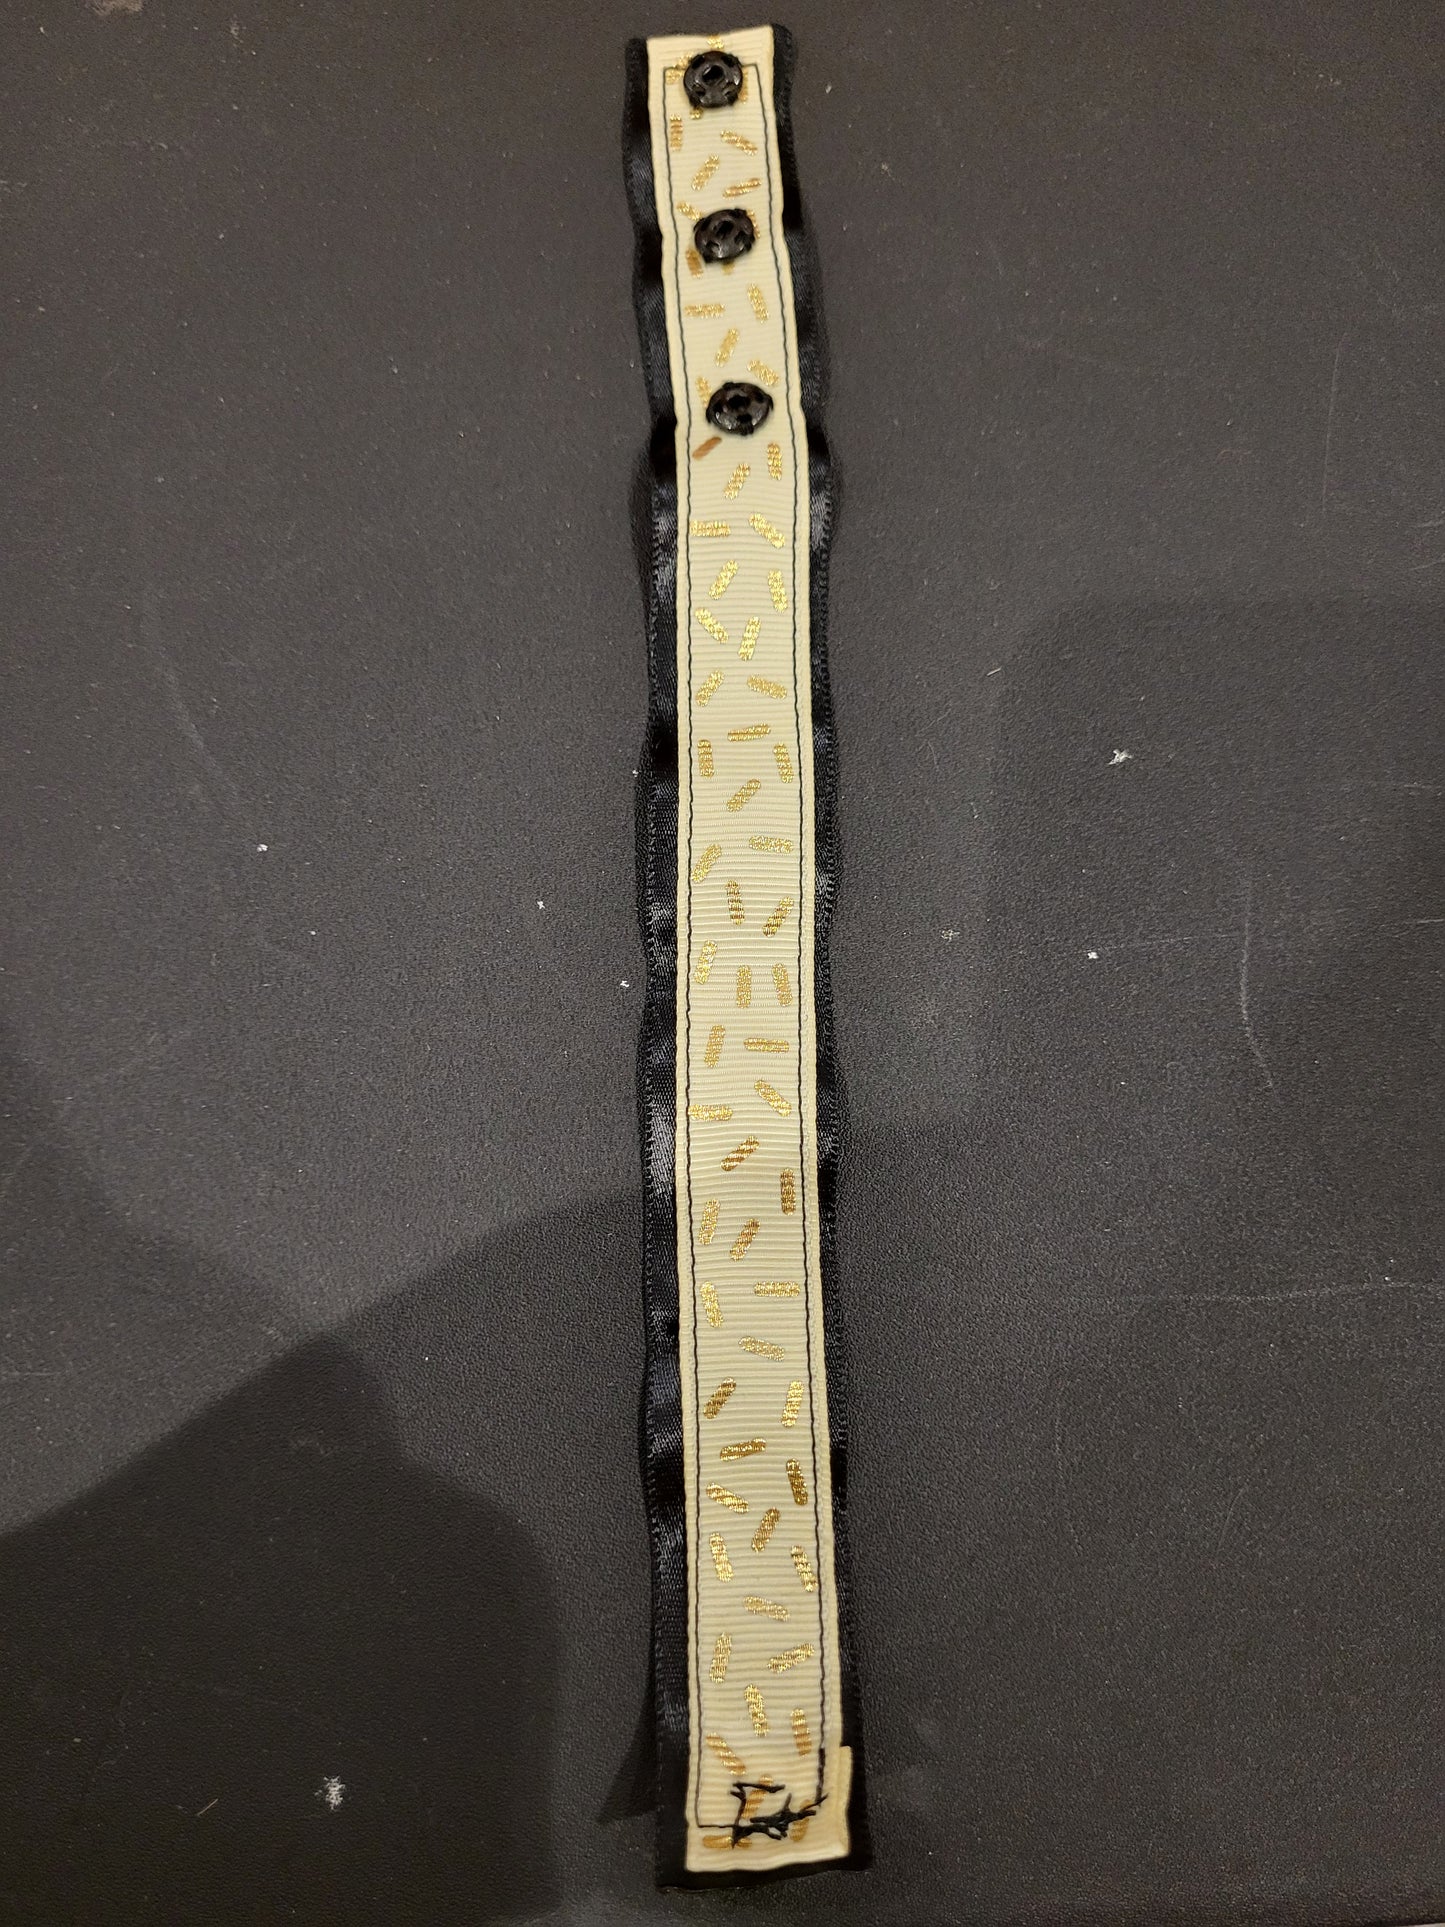 Handmade gold sprinkle fabric cuff bracelet with black ribbon backing